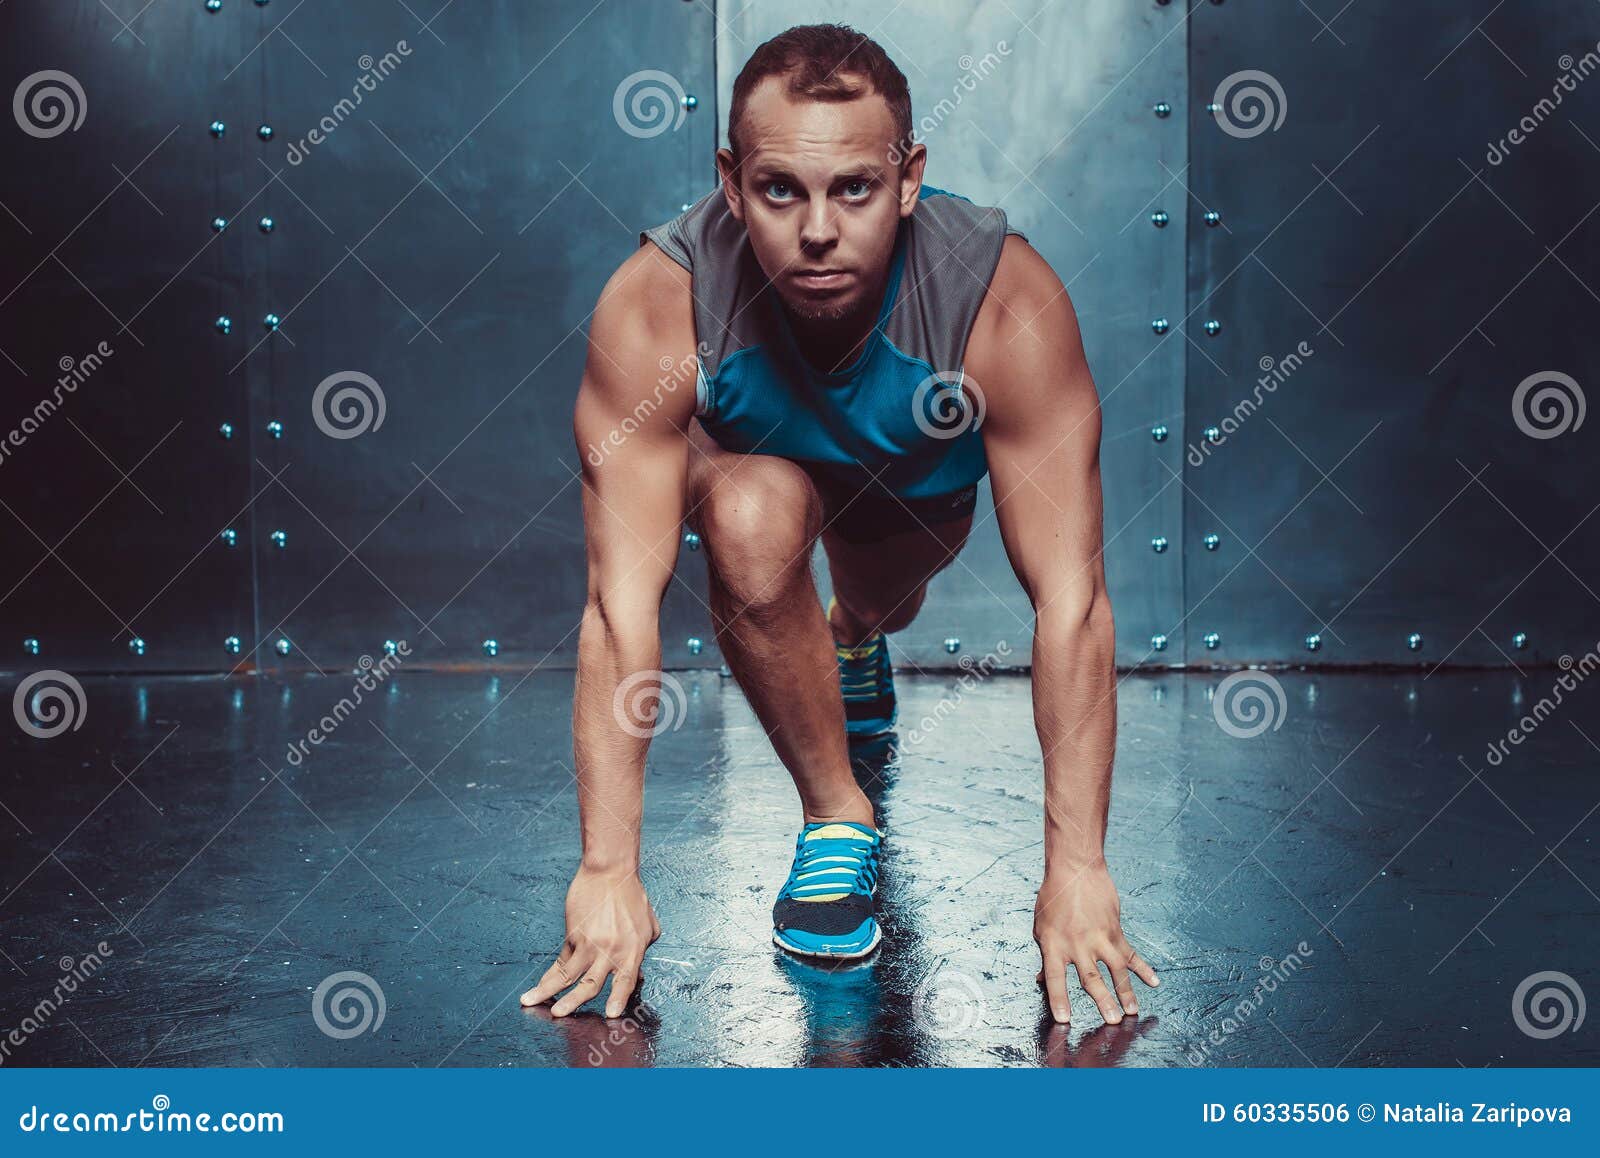 runner, sportsman muscular man in a position of readiness, sport, run